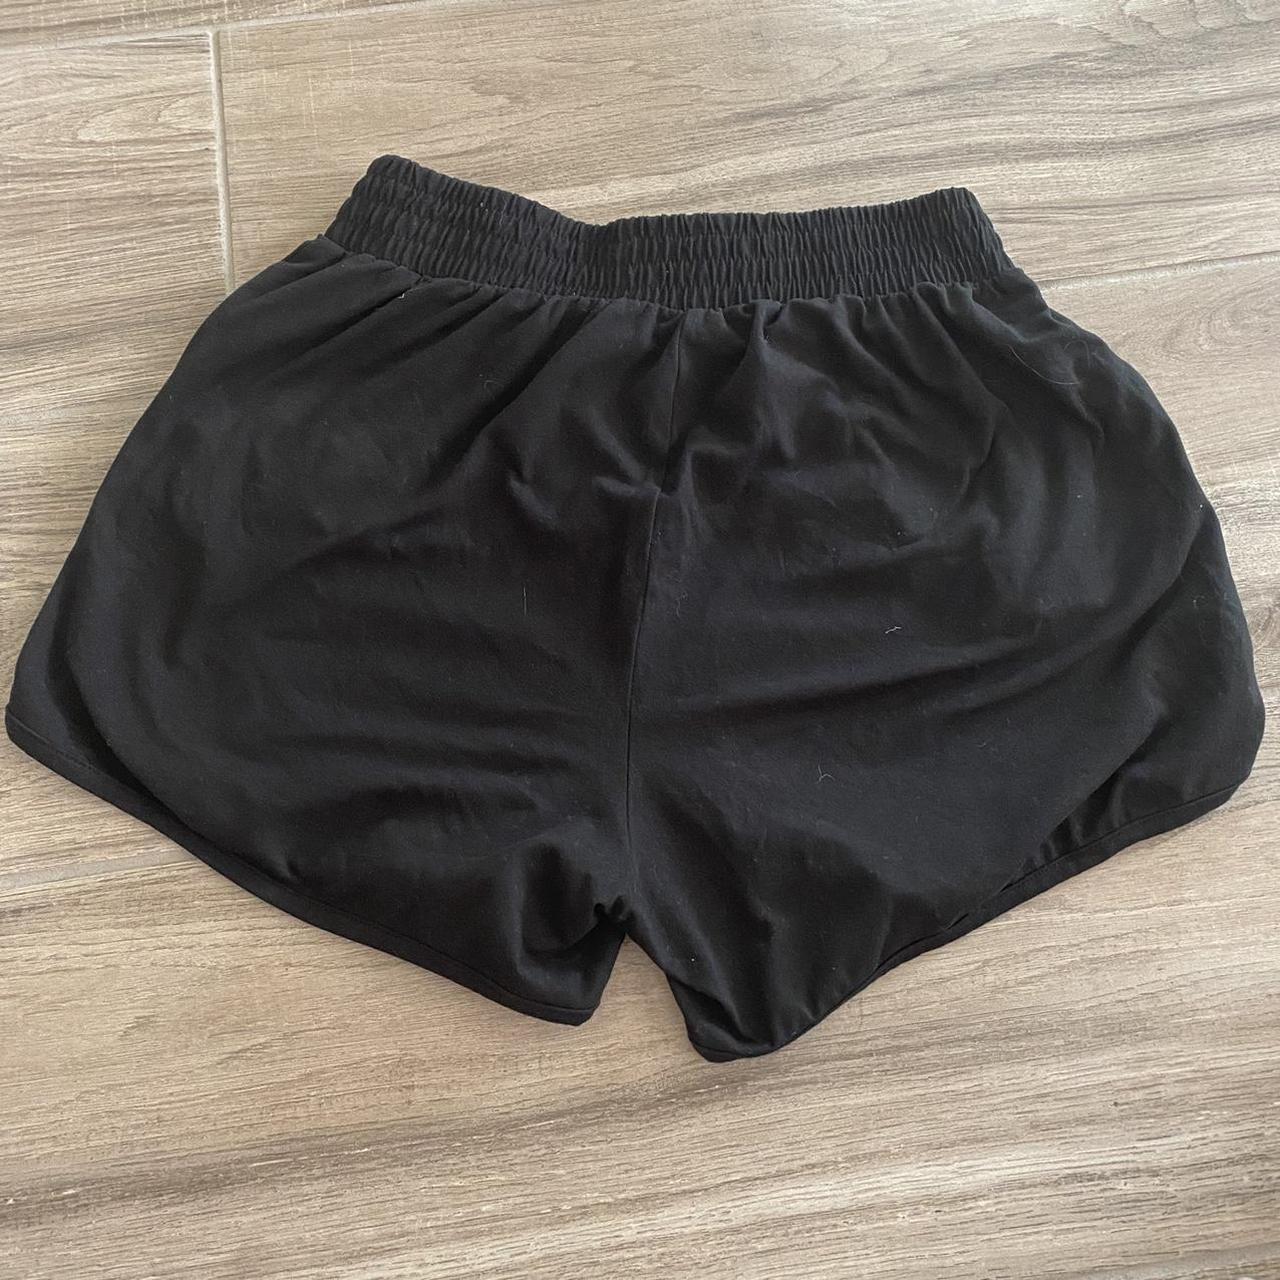 Black Soft Shorts 🖤 Size large these shorts are... - Depop